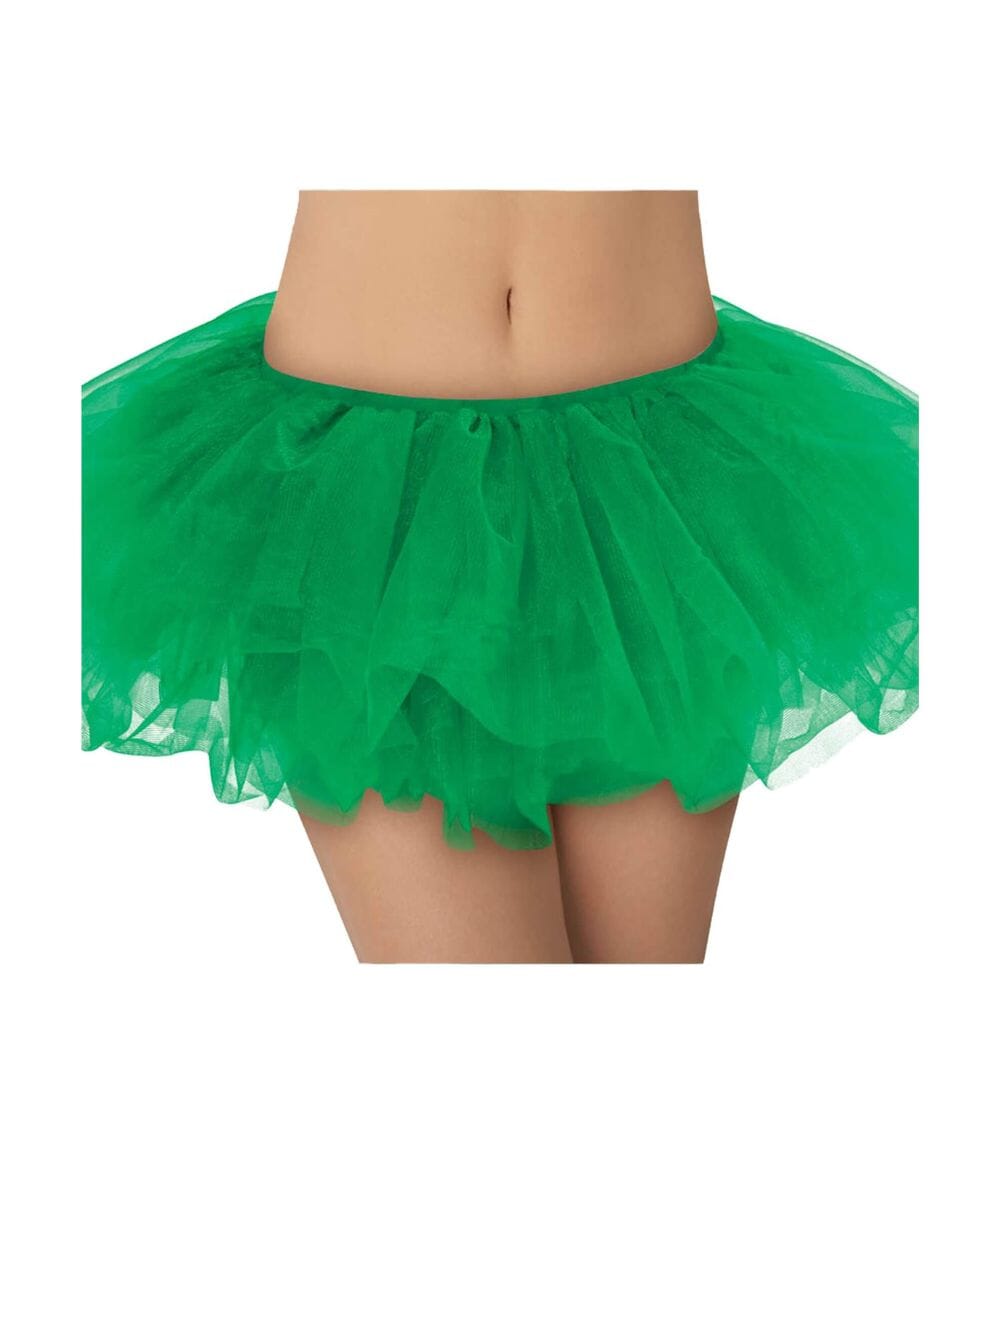 Green - 5 Layer Tutu Skirt for Running, Dress-Up, Costumes - Sydney So Sweet